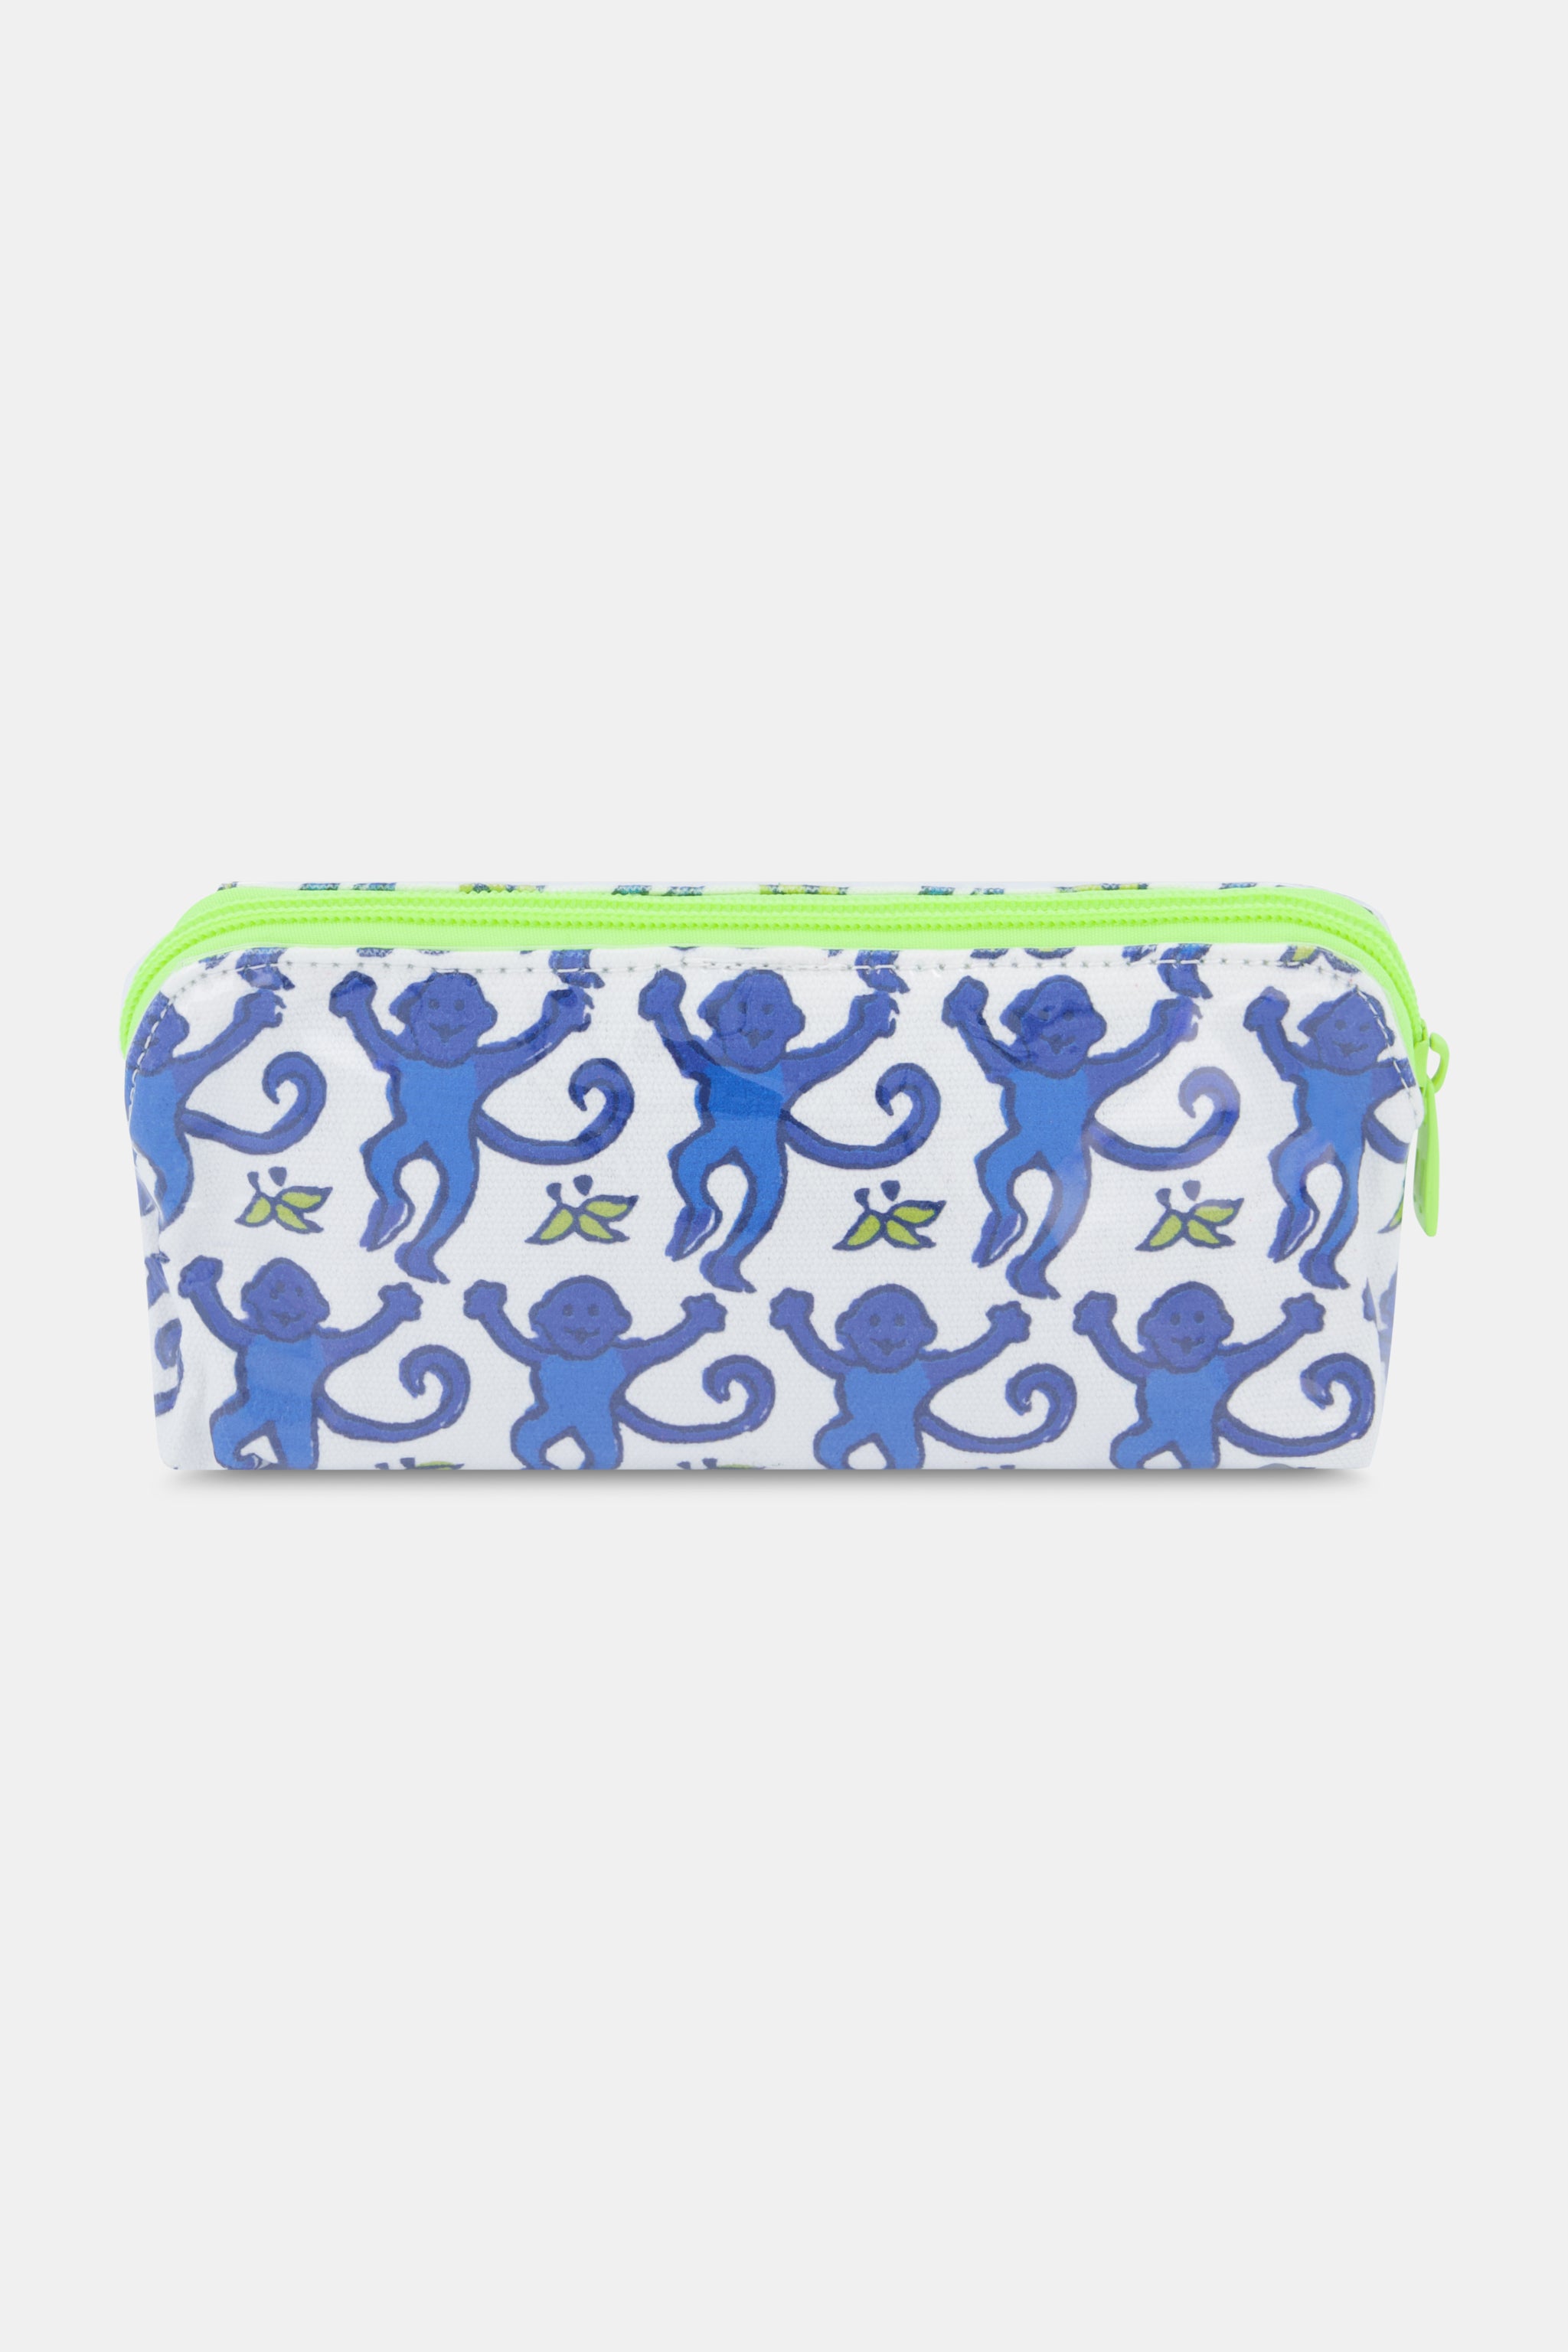 Kids Green Bum Bag – The Monkey Box